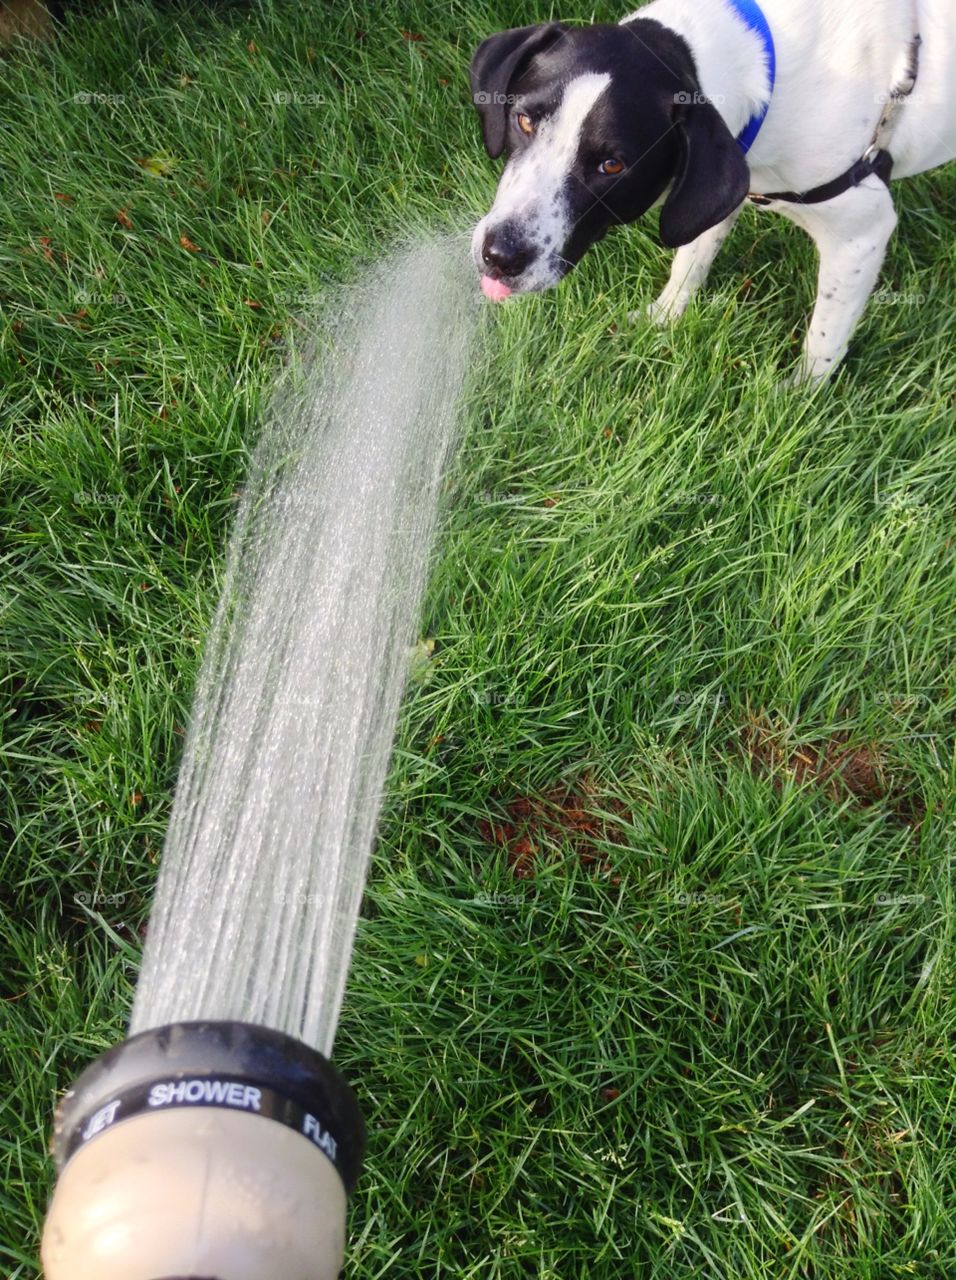 Dog drinking from hose. Dog drinking from hose. Can't get enough water!